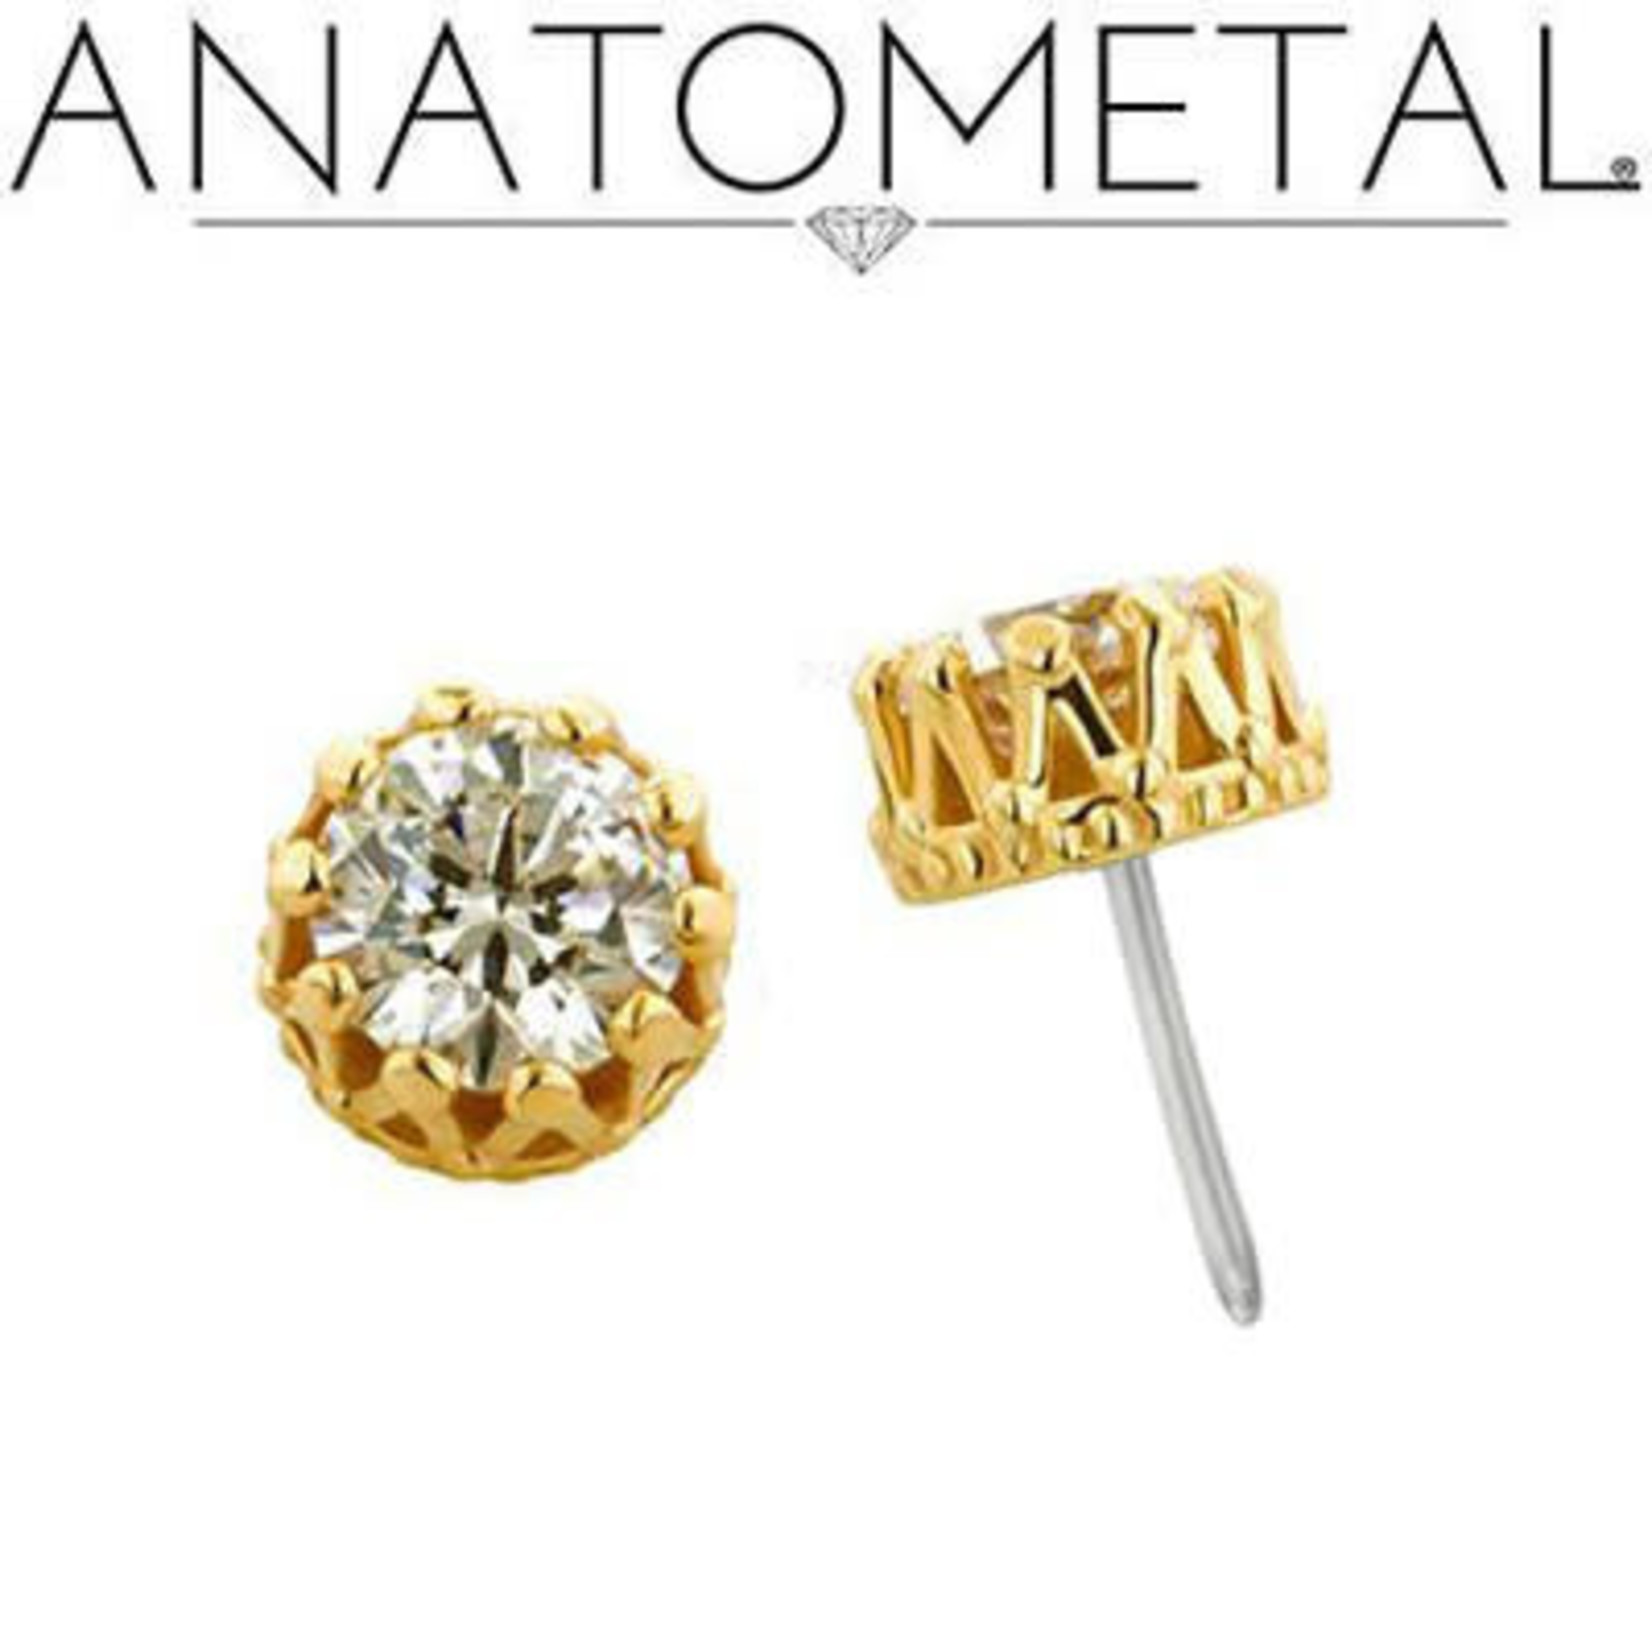 Anatometal Anatometal gold "King" press-fit end with crown-set 4.0 gemstone